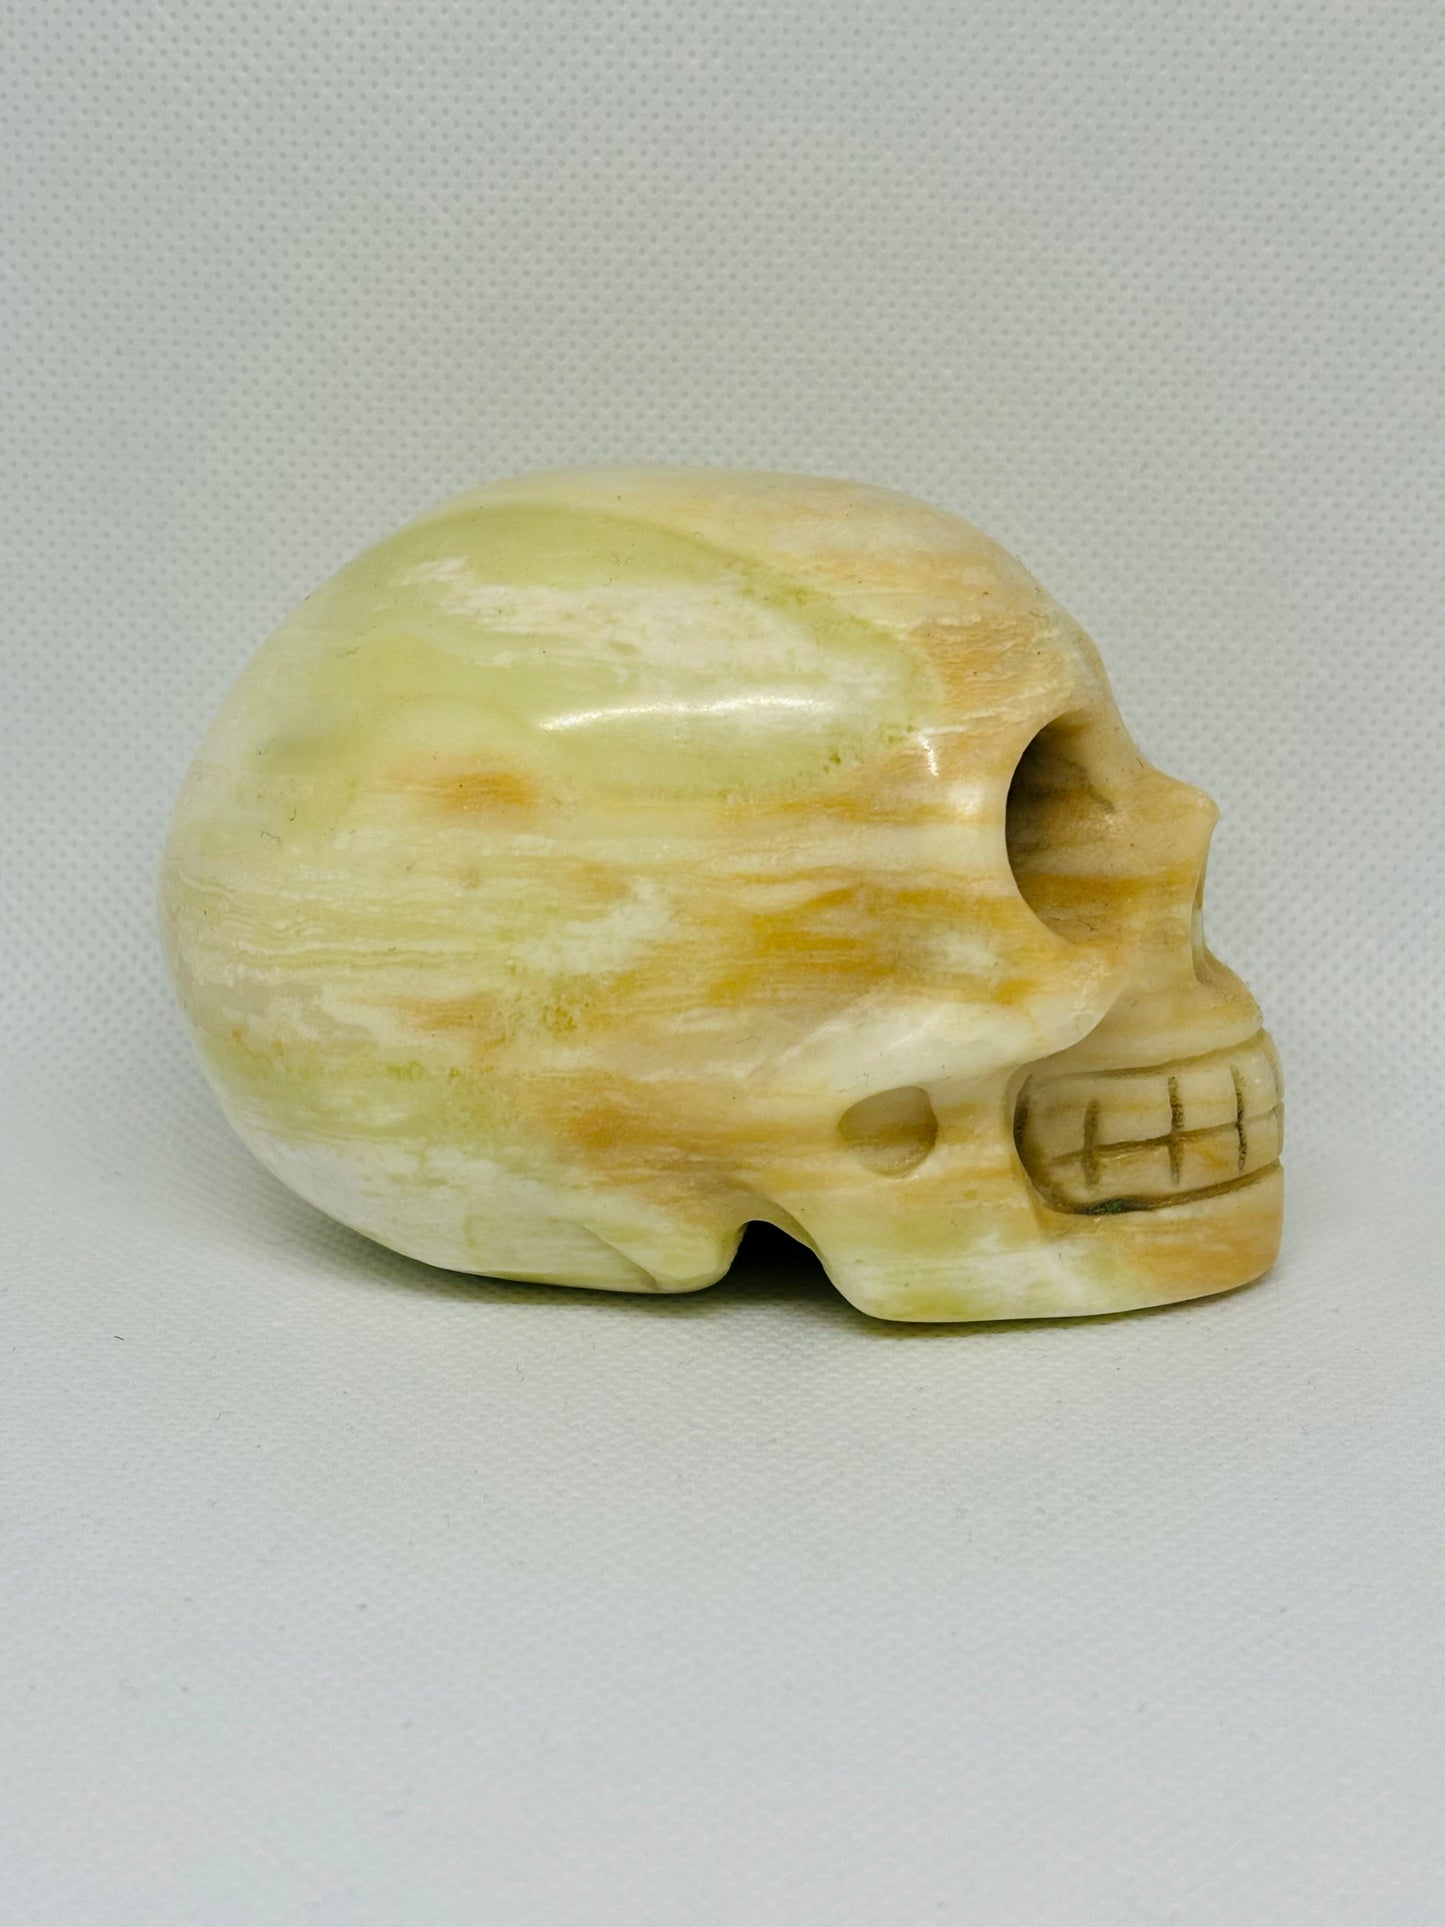 Carved Crystal Skull 1.1lb #WG2